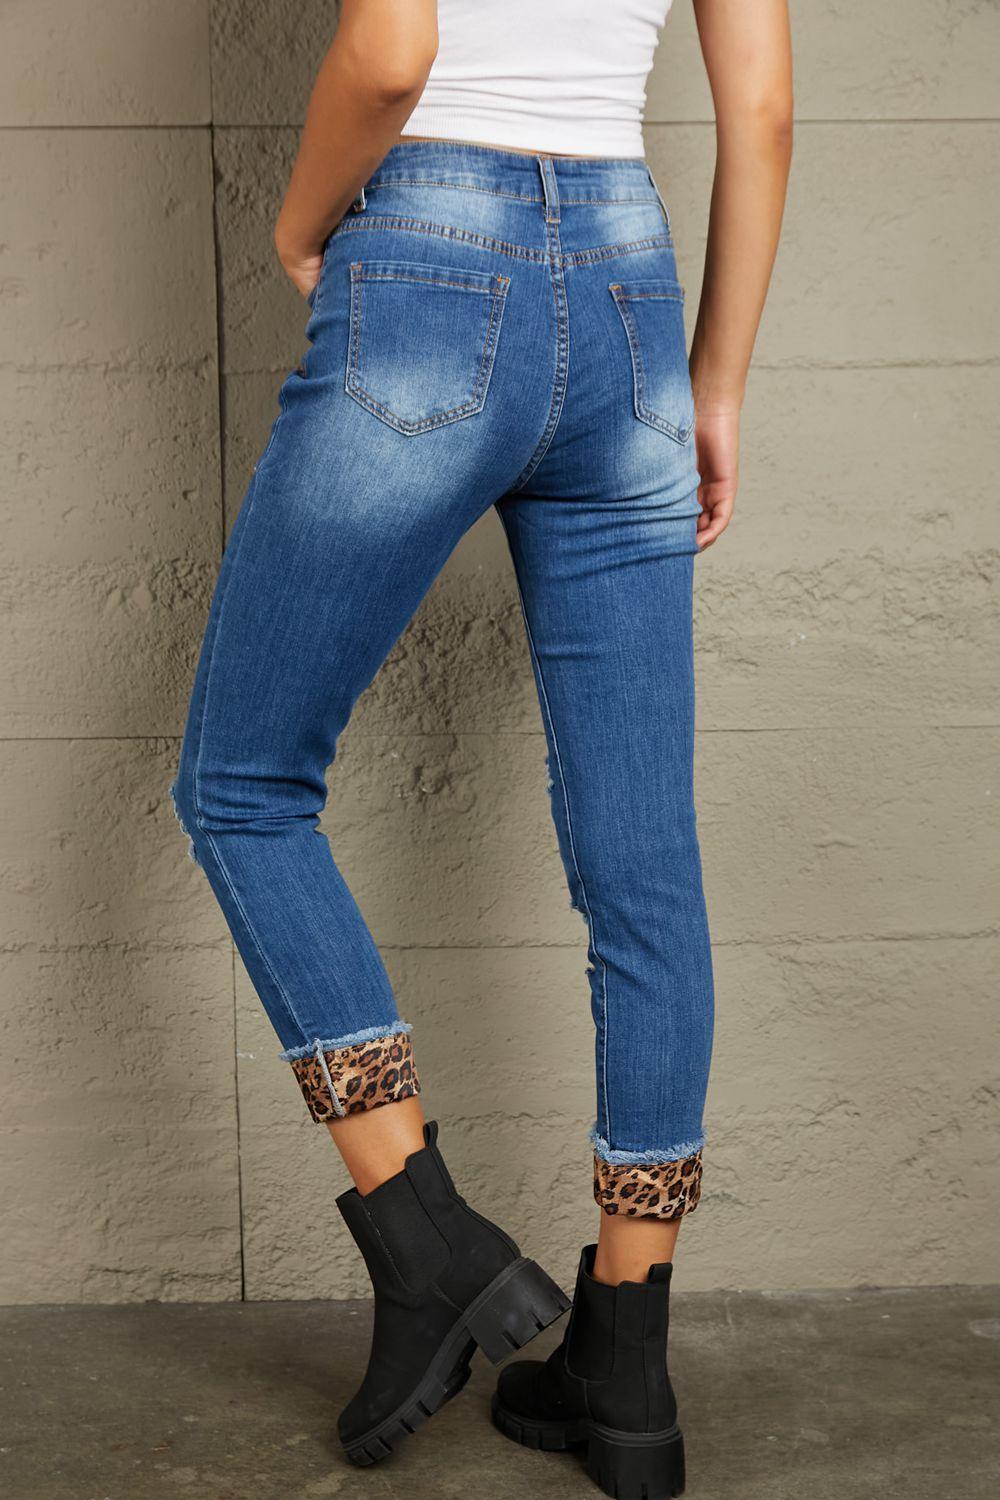 Wild Chic Cropped Leopard Patch Jeans - MXSTUDIO.COM